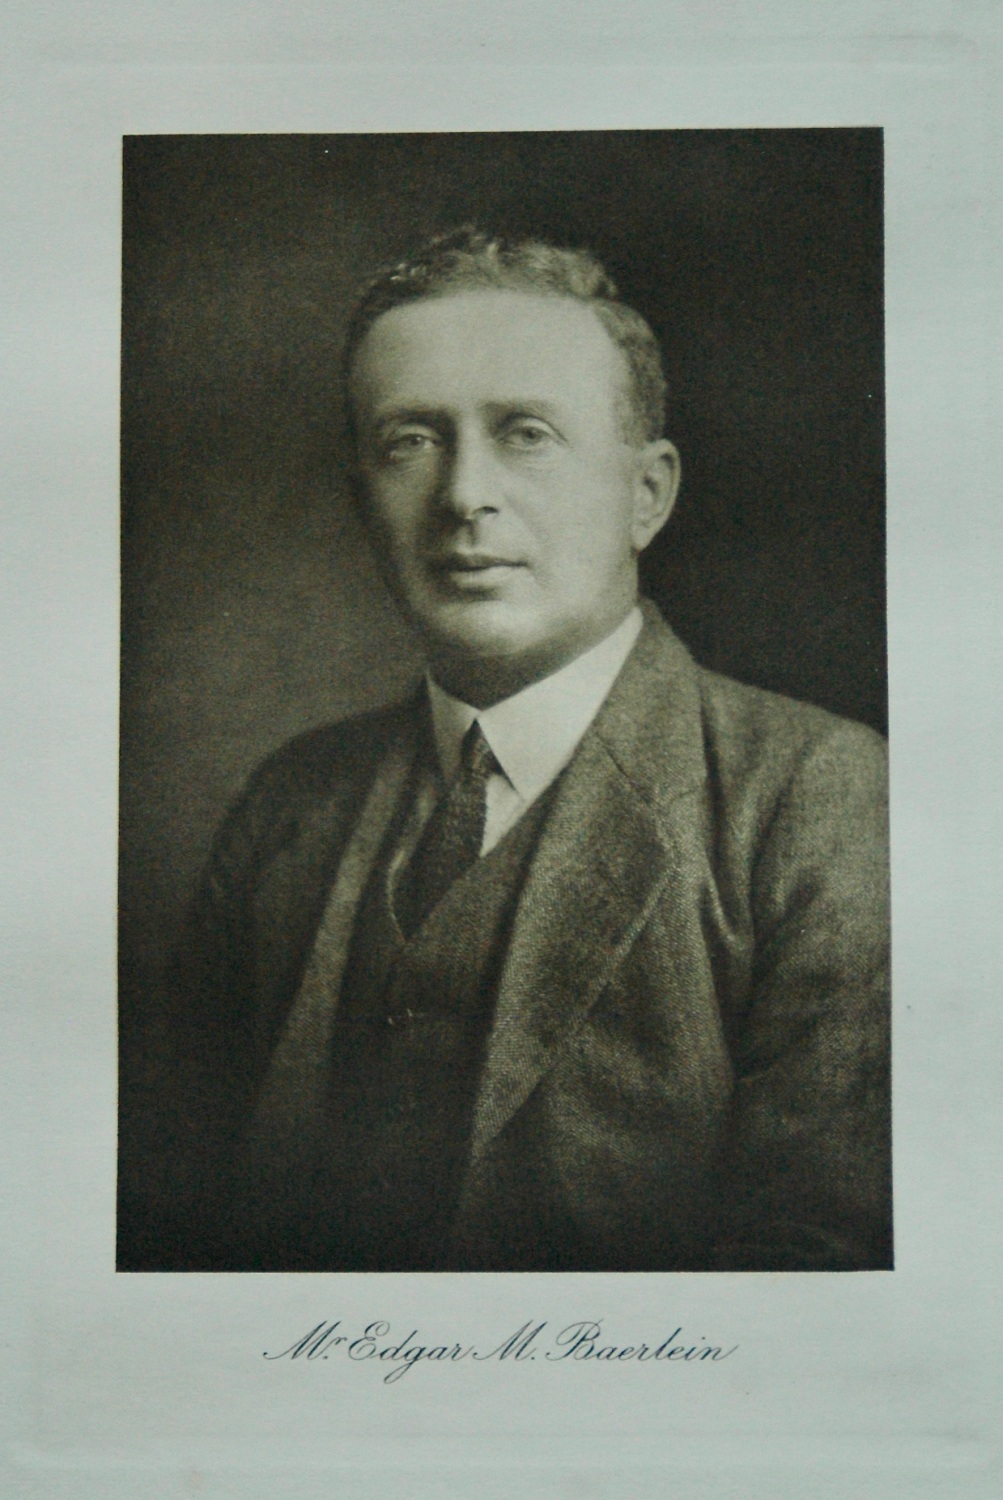 Mr. Edgar M. Baerlein.